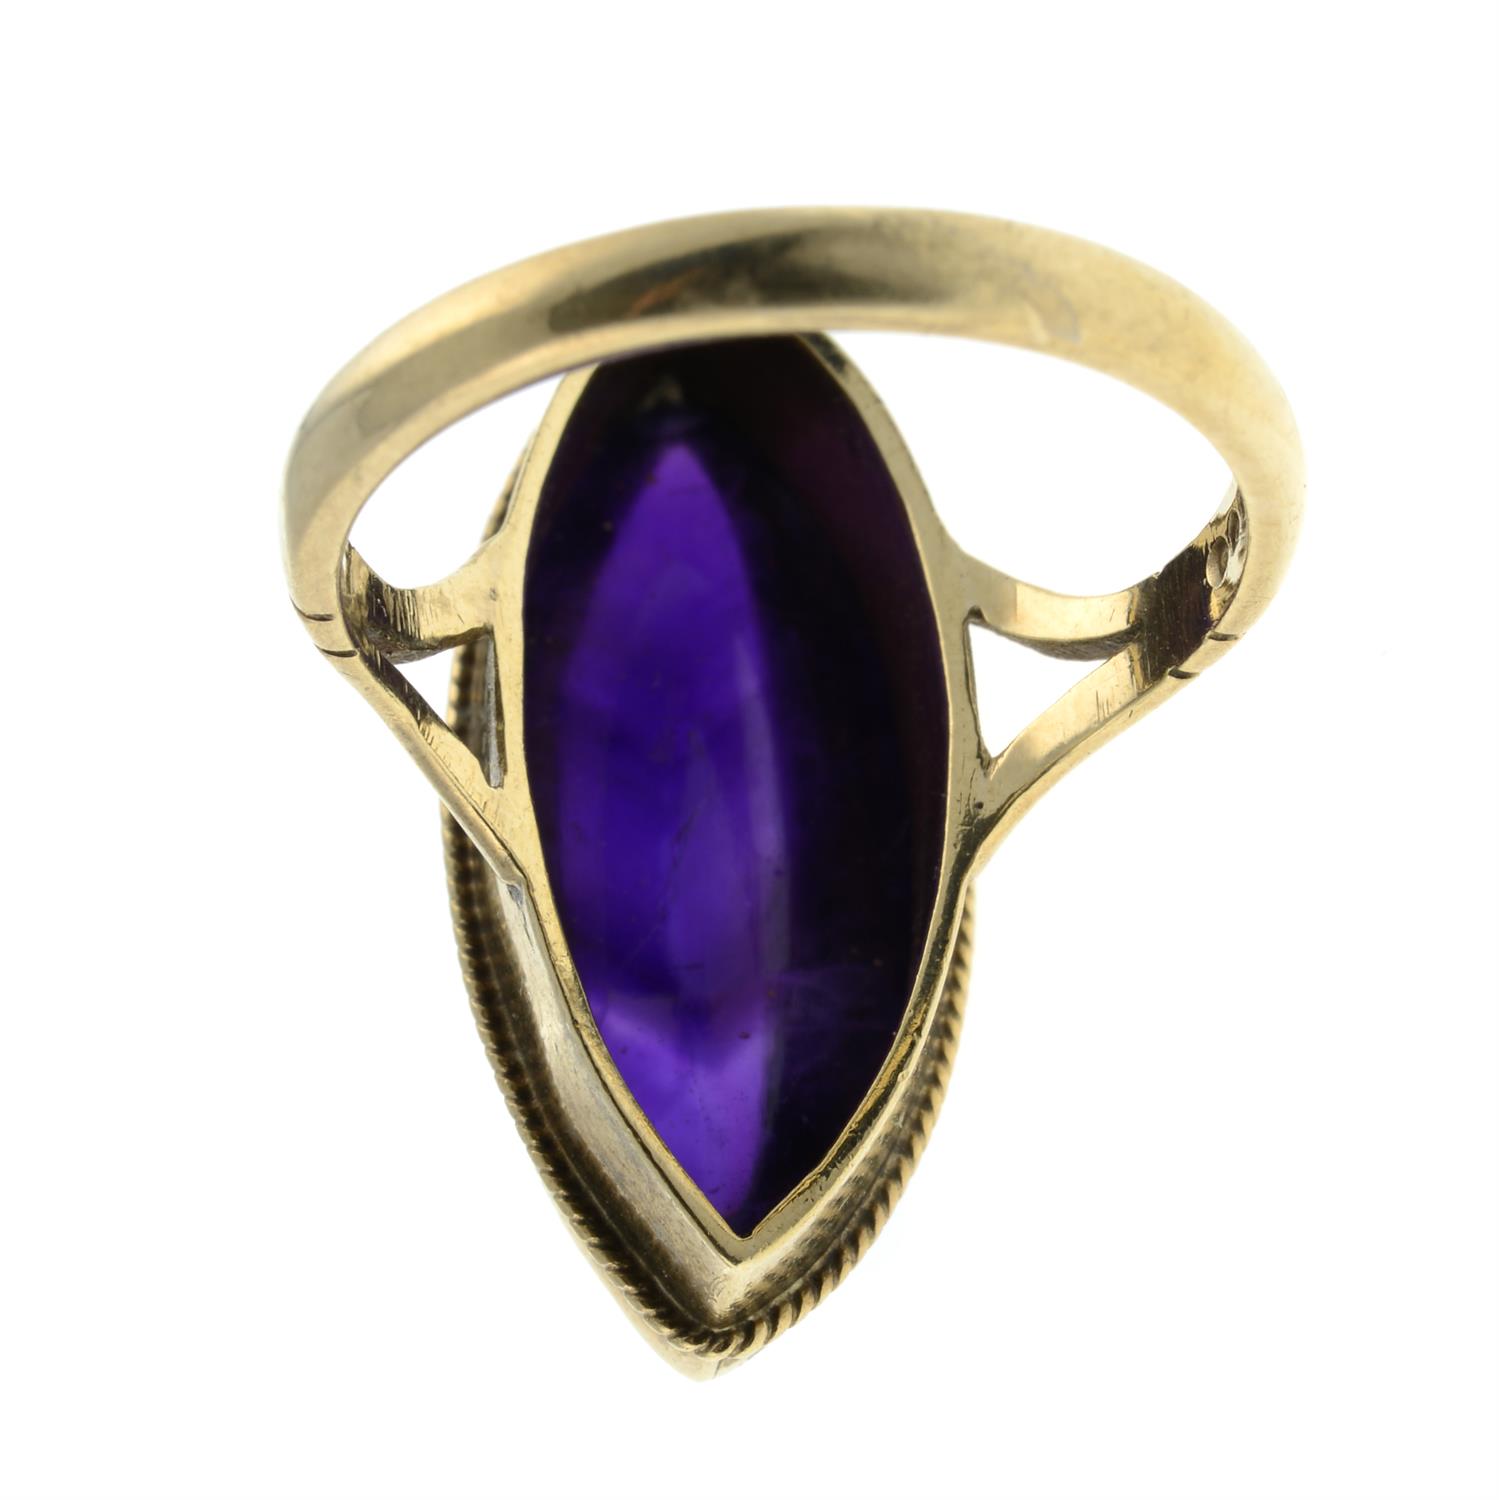 1960s amethyst dress ring - Image 2 of 2